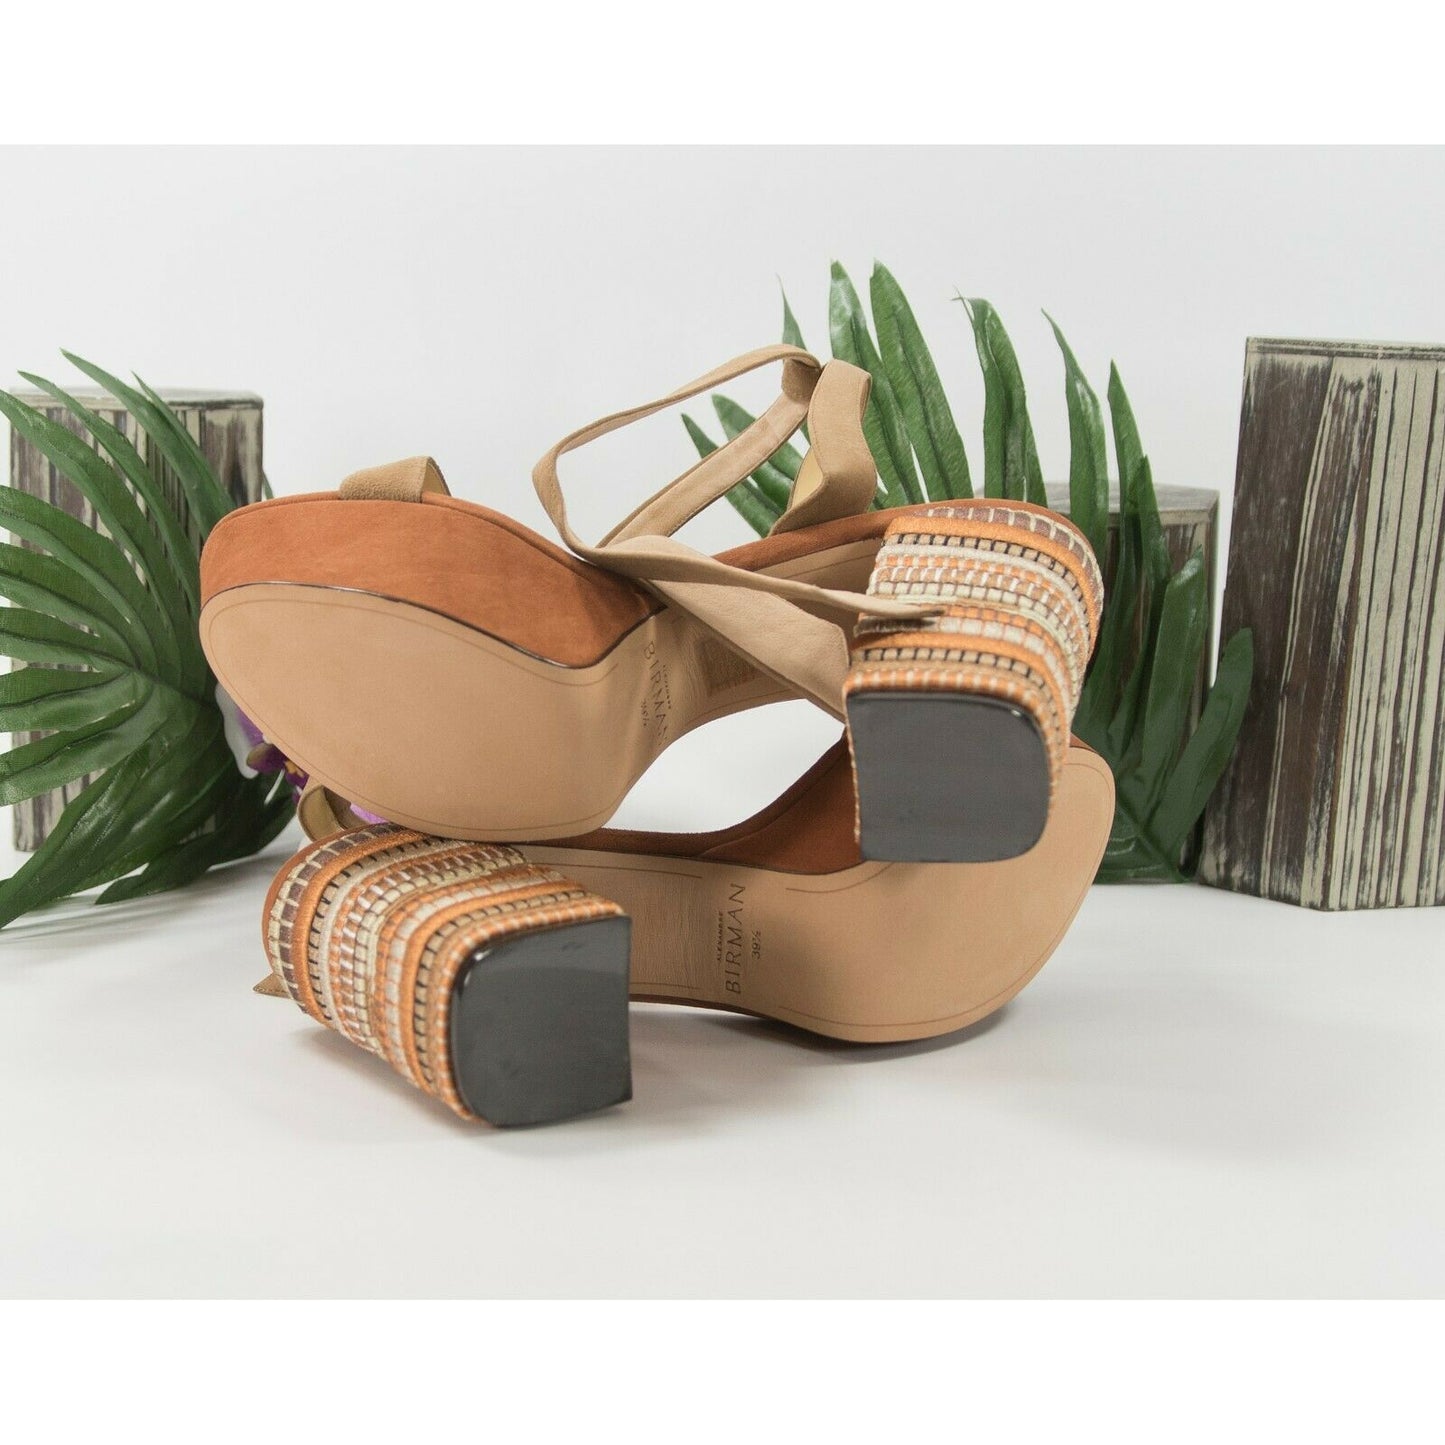 Alexandre Birman Noelle Suede Embroidery Heel Platform Sandals 39.5 9.5 NIB